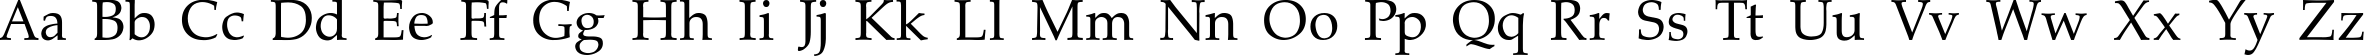 Пример написания английского алфавита шрифтом Palatino-Normal